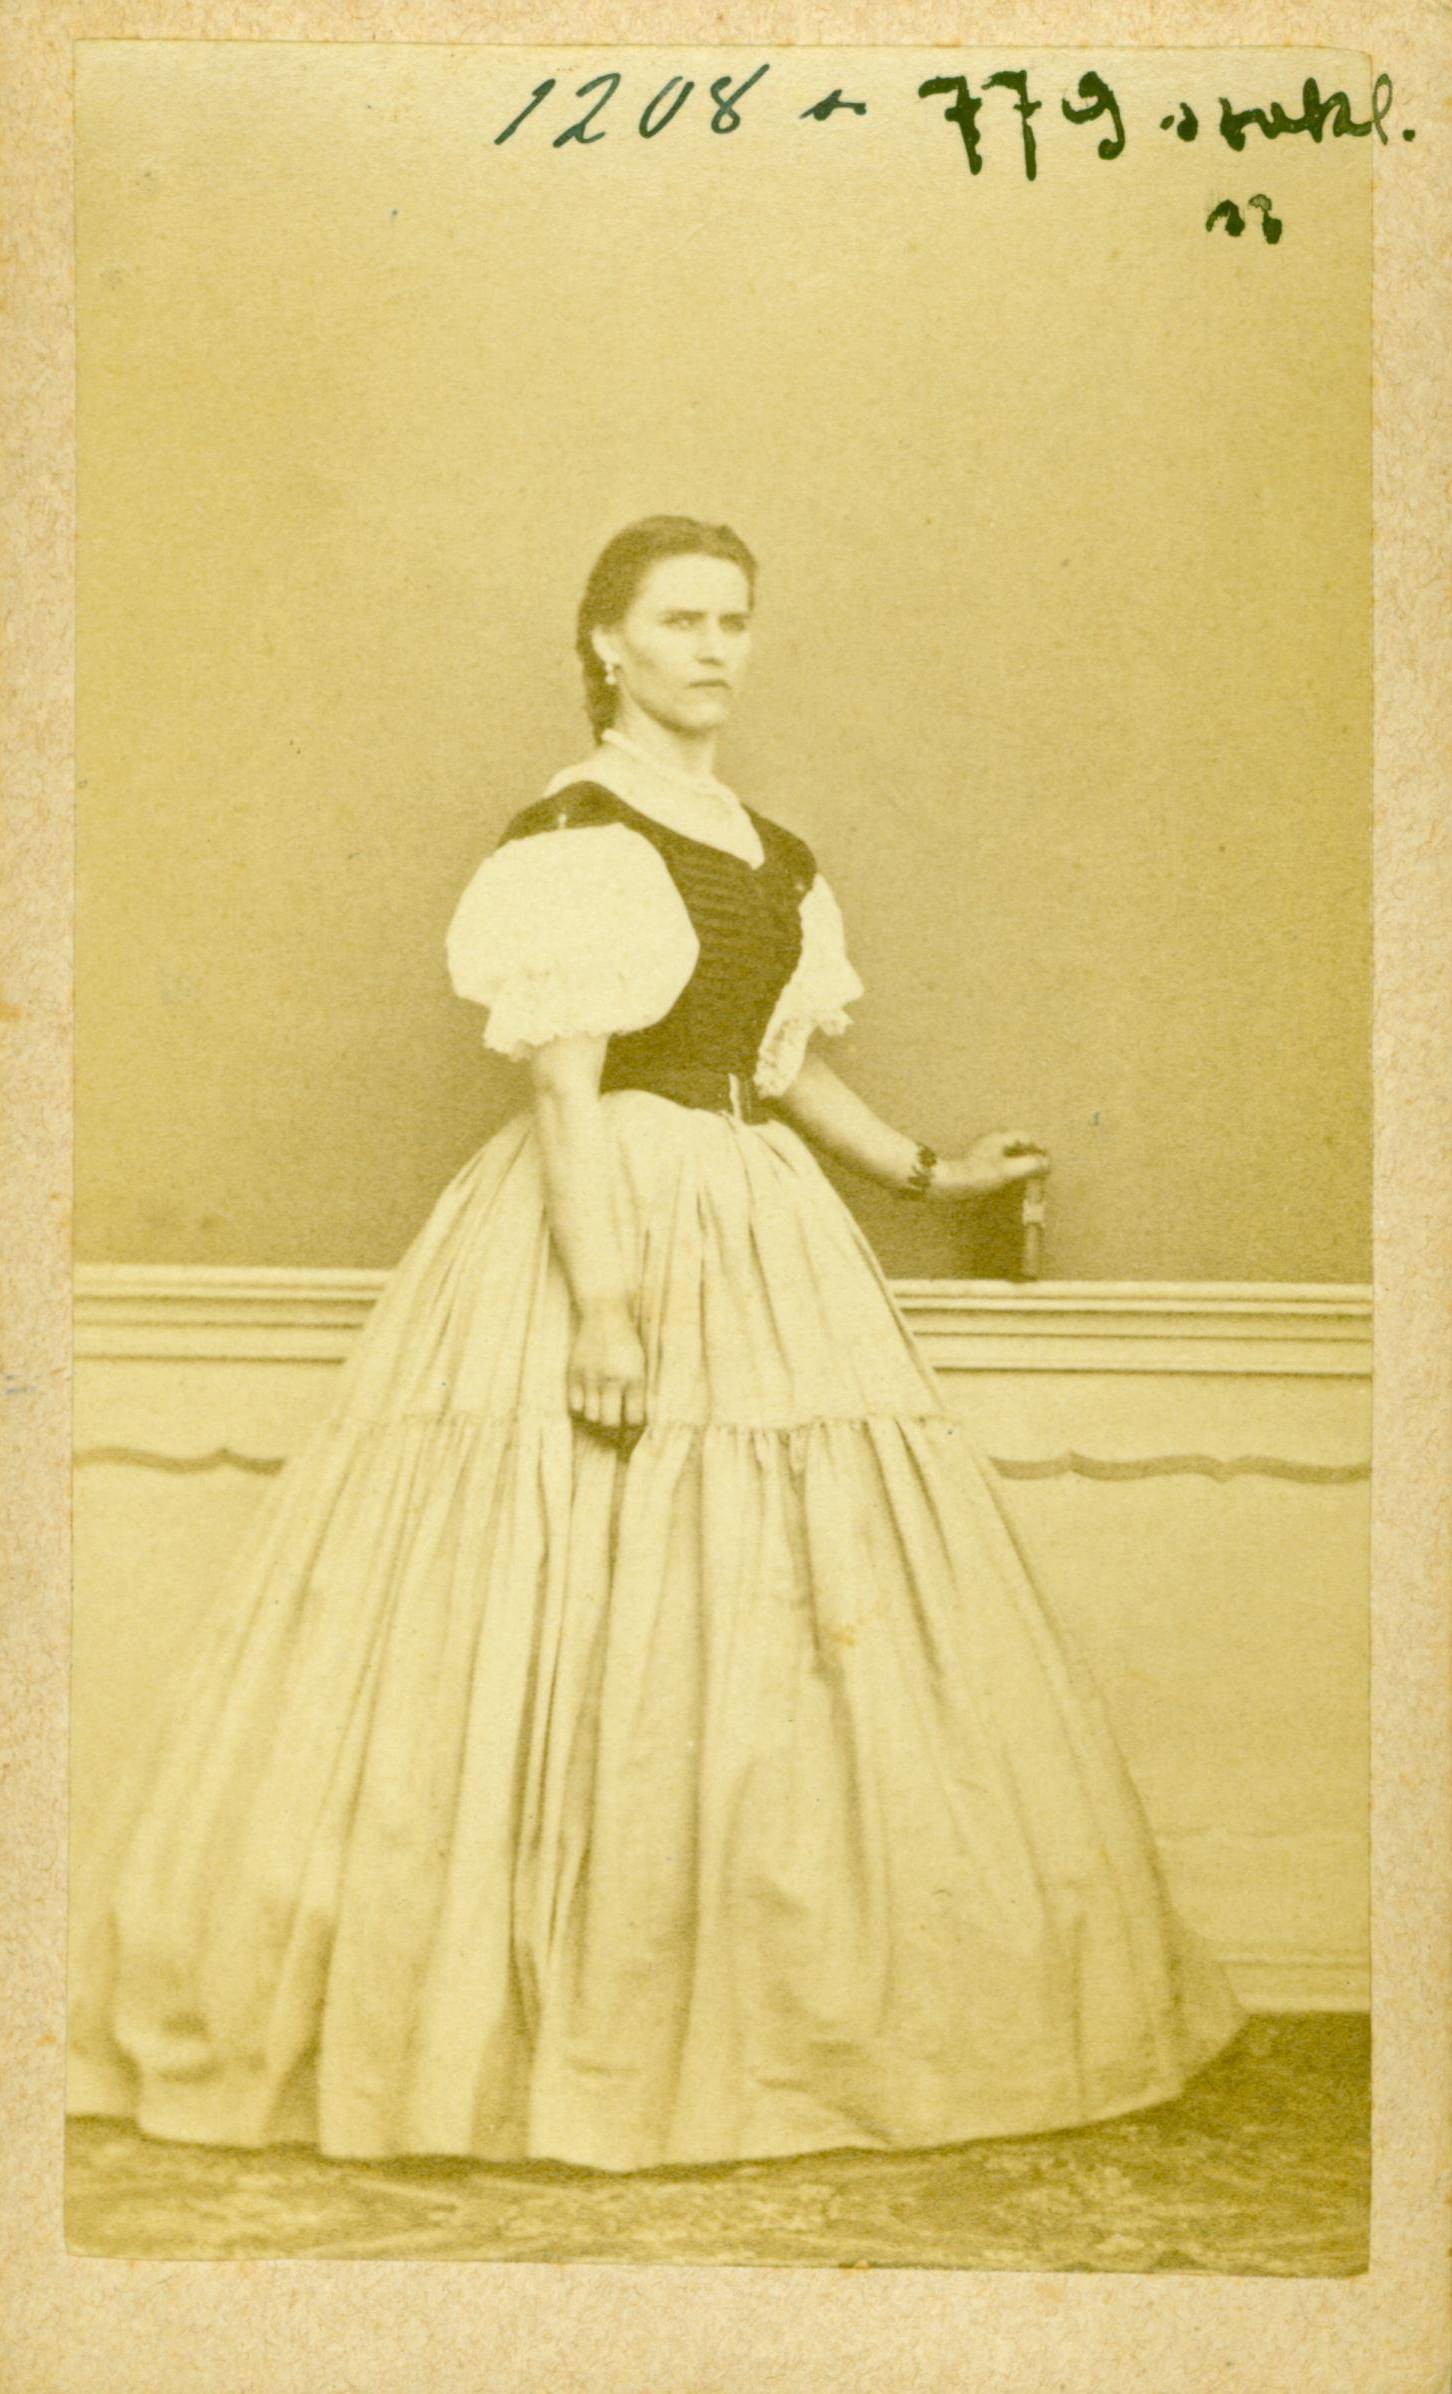 1860-1870 évekbeli úri női viselet (Rippl-Rónai Múzeum RR-F)